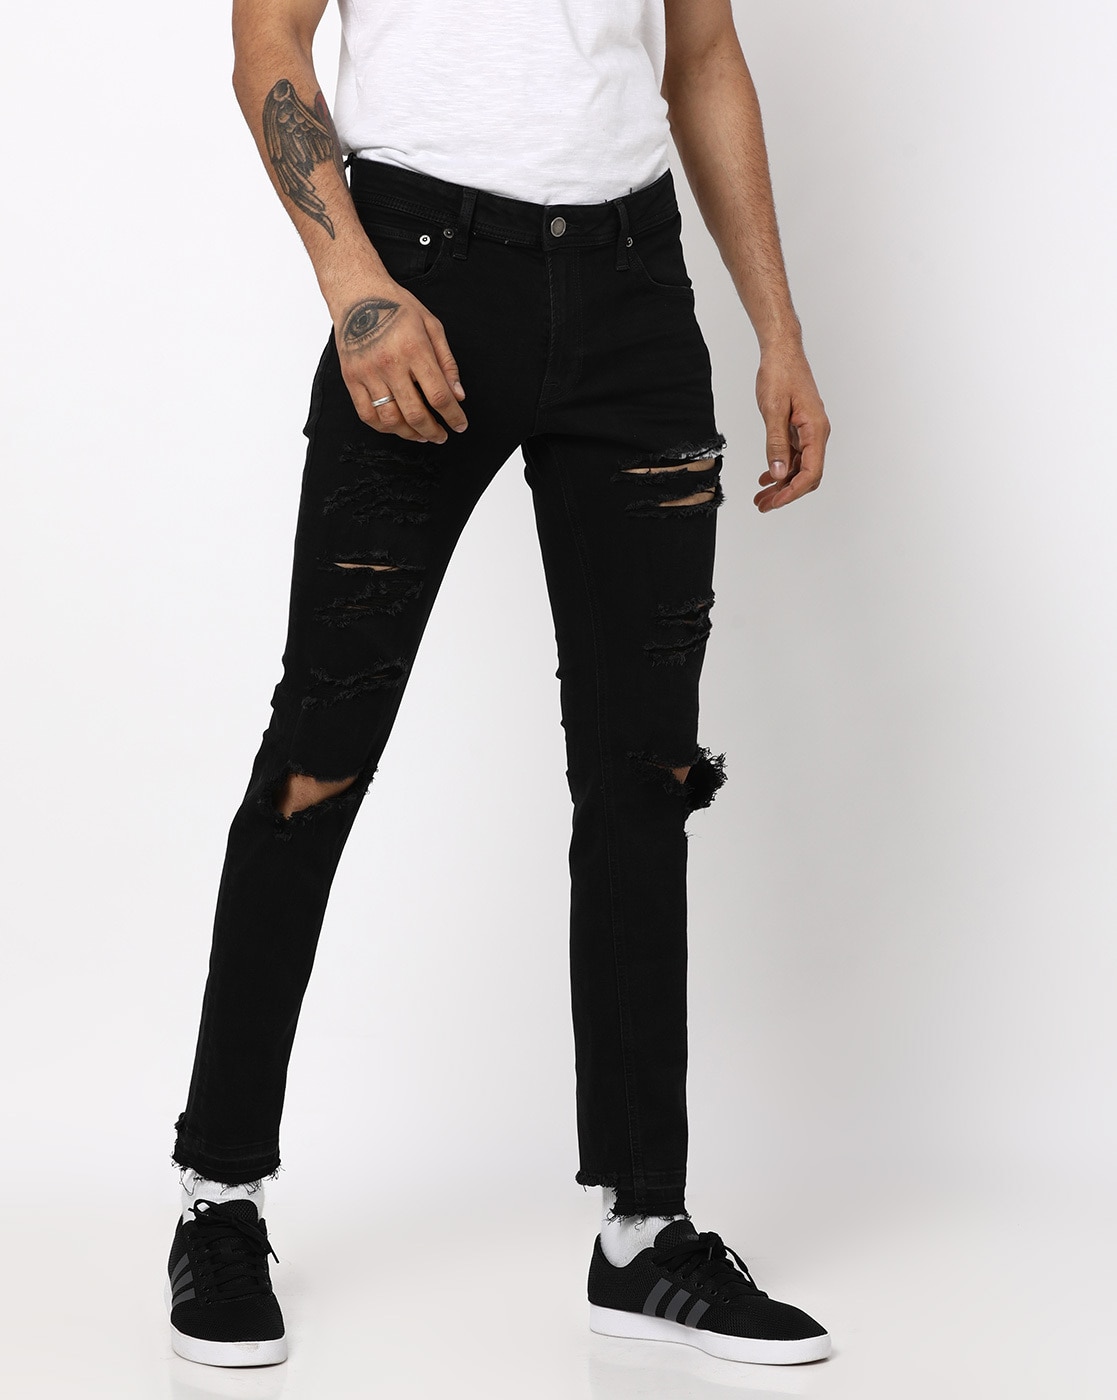 Denim Comfort Fit Damler Mens Knee Cut Black Ripped Jeans Waist Size 2834